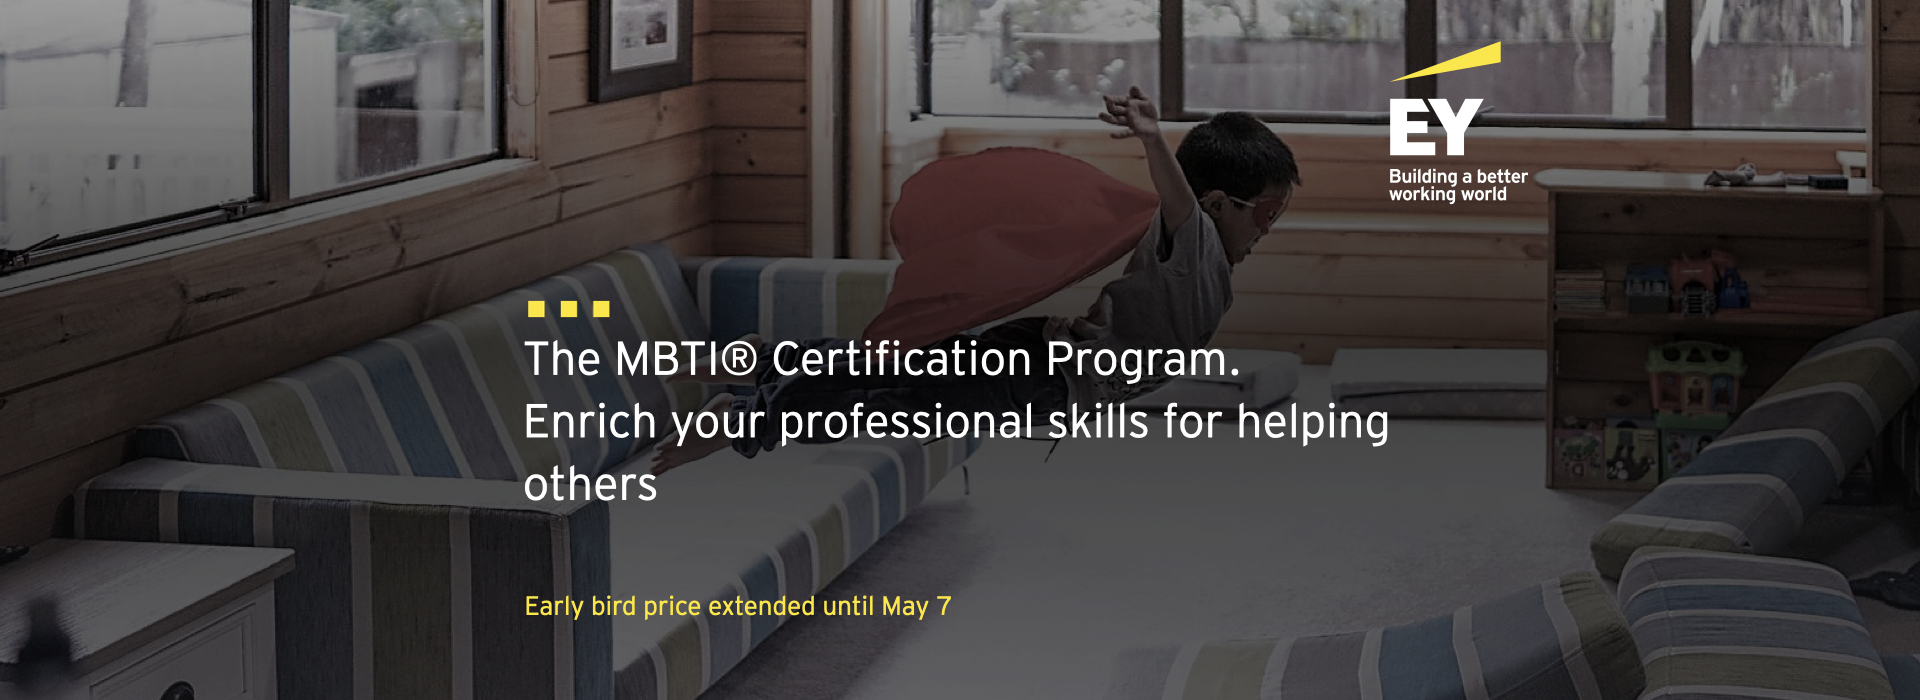 The MBTI® Certification Program